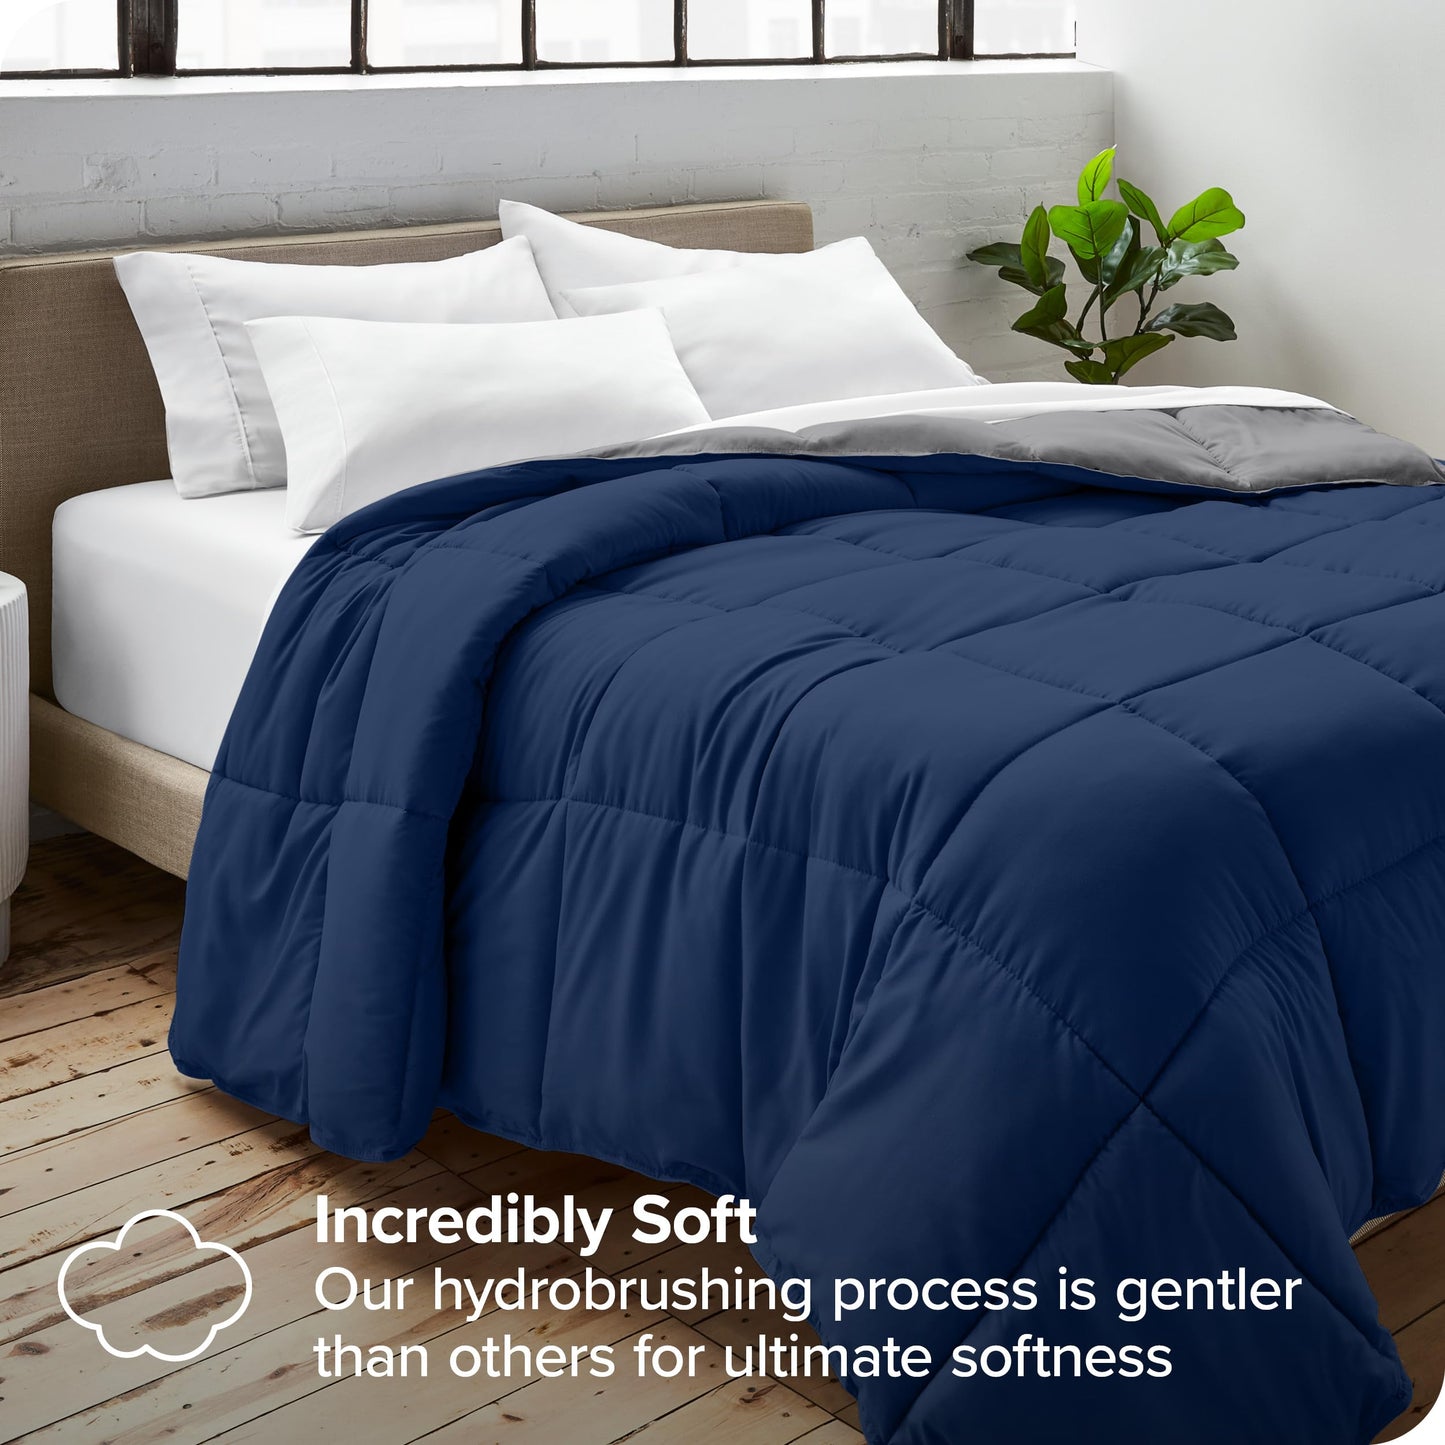 Bare Home Queen Comforter - Reversible Colors - Goose Down Alternative - Ultra-Soft - Premium 1800 Series - All Season Warmth - Bedding Comforter (Queen, Dark Blue/Grey)